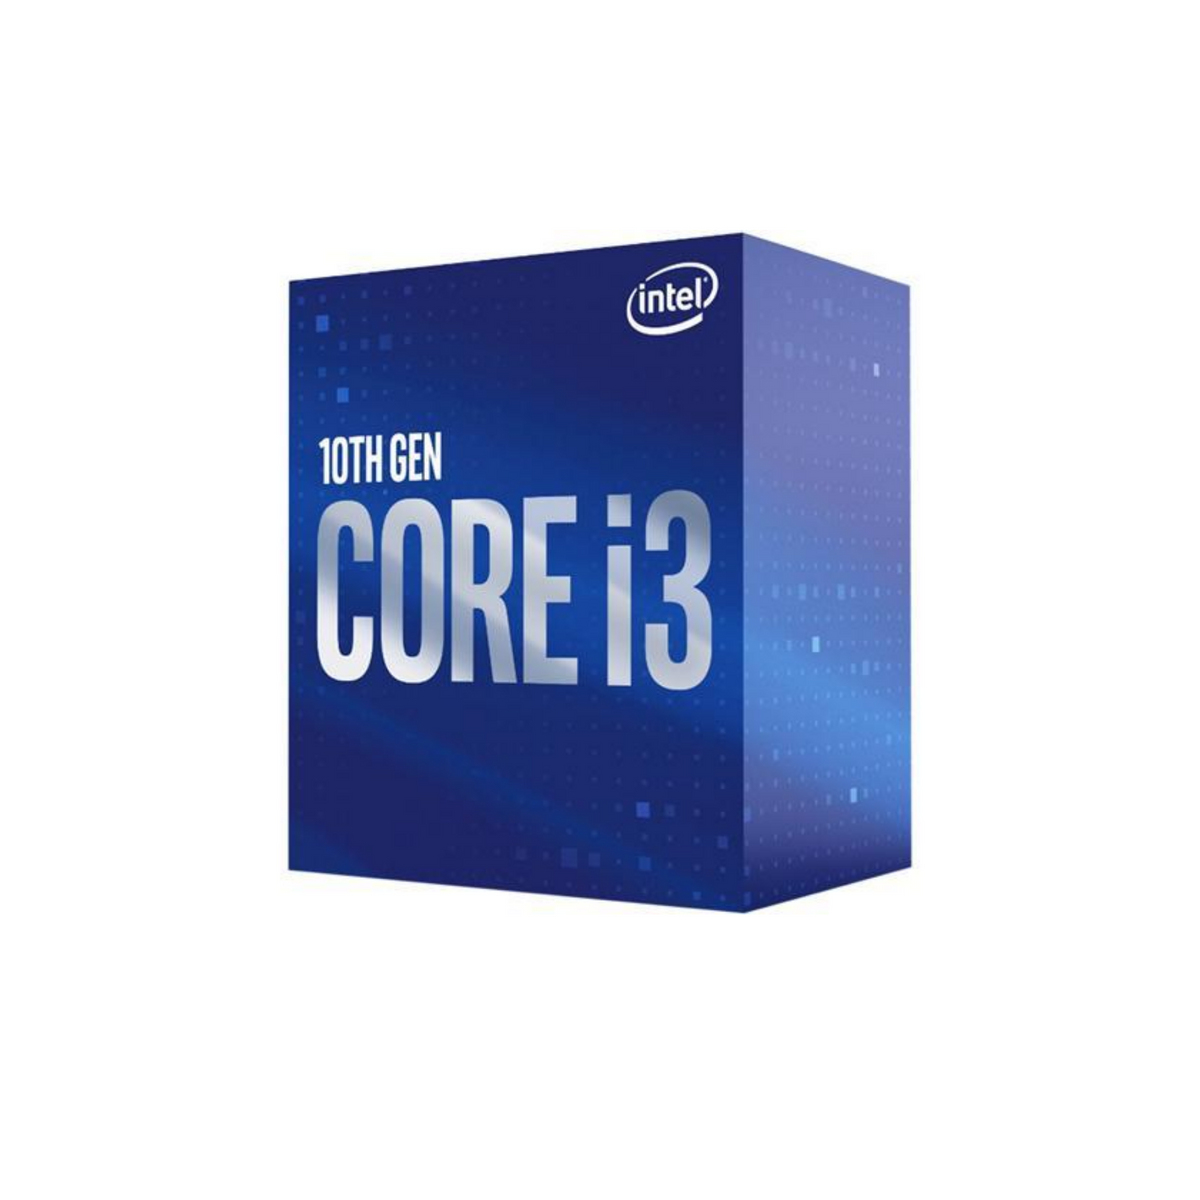 Intel® Core™ i3-10100 Processor (6M Cache, up to 4.30 GHz) - 10th Gen,